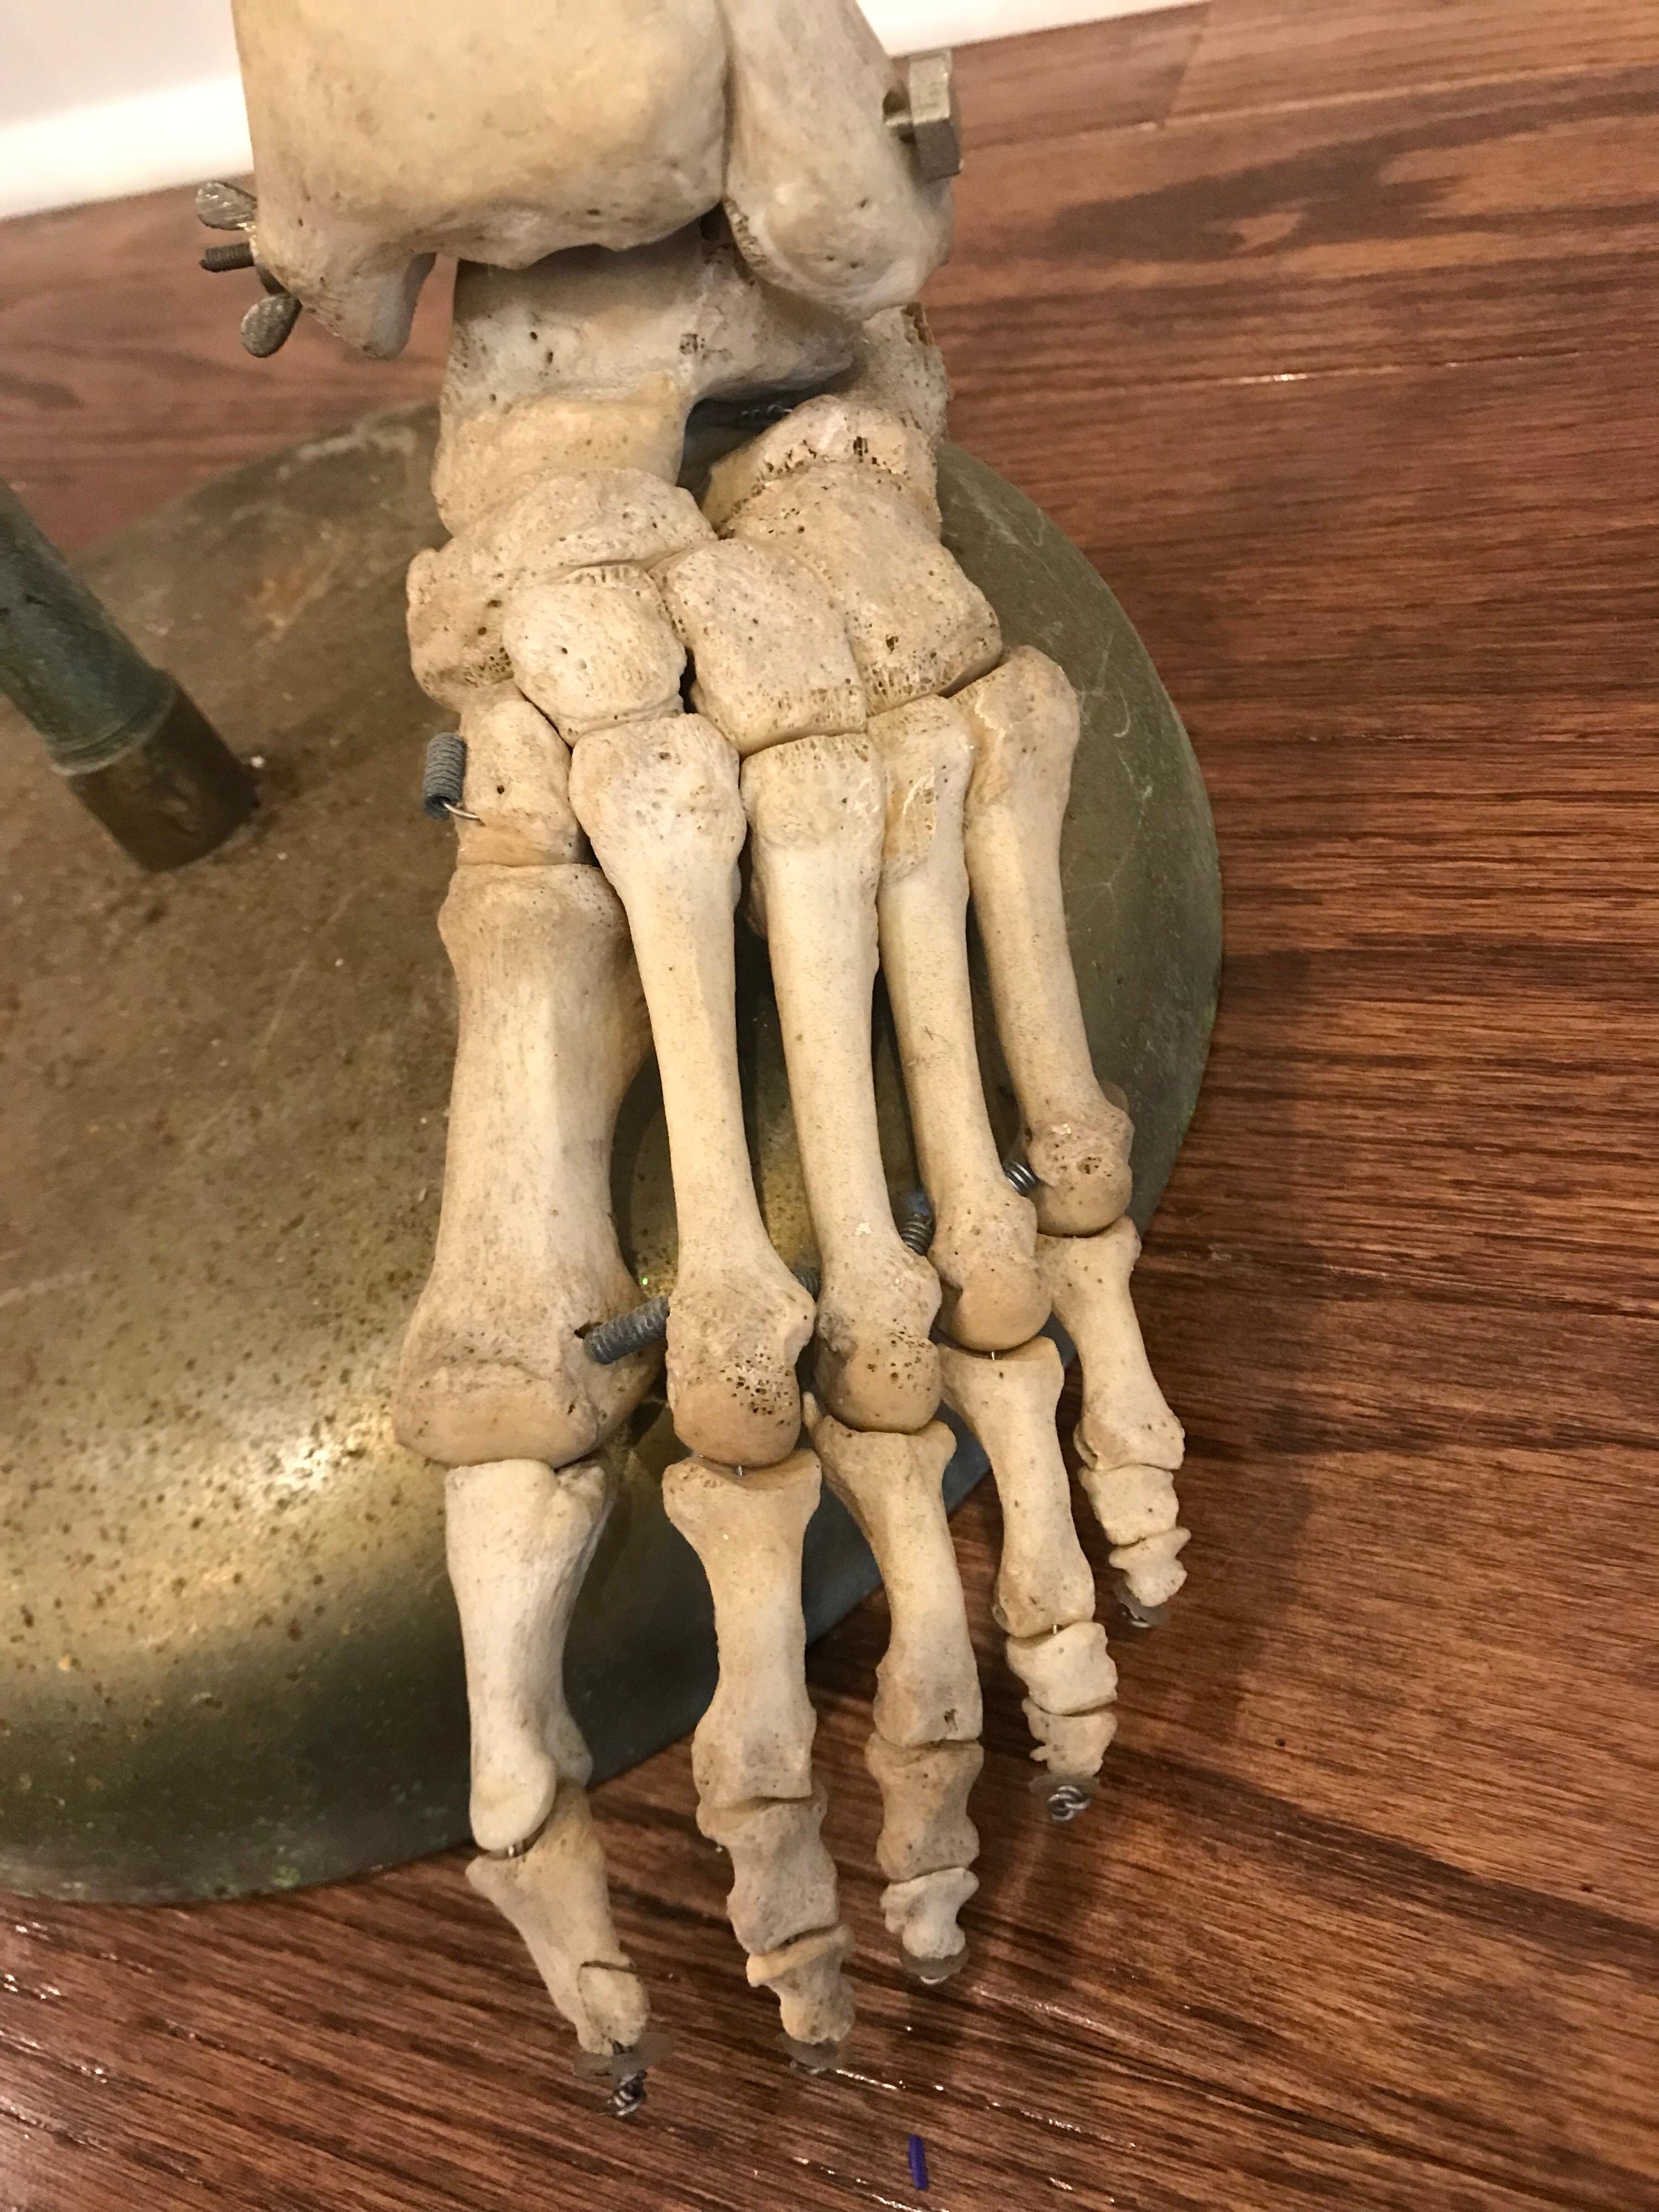 skeleton leg